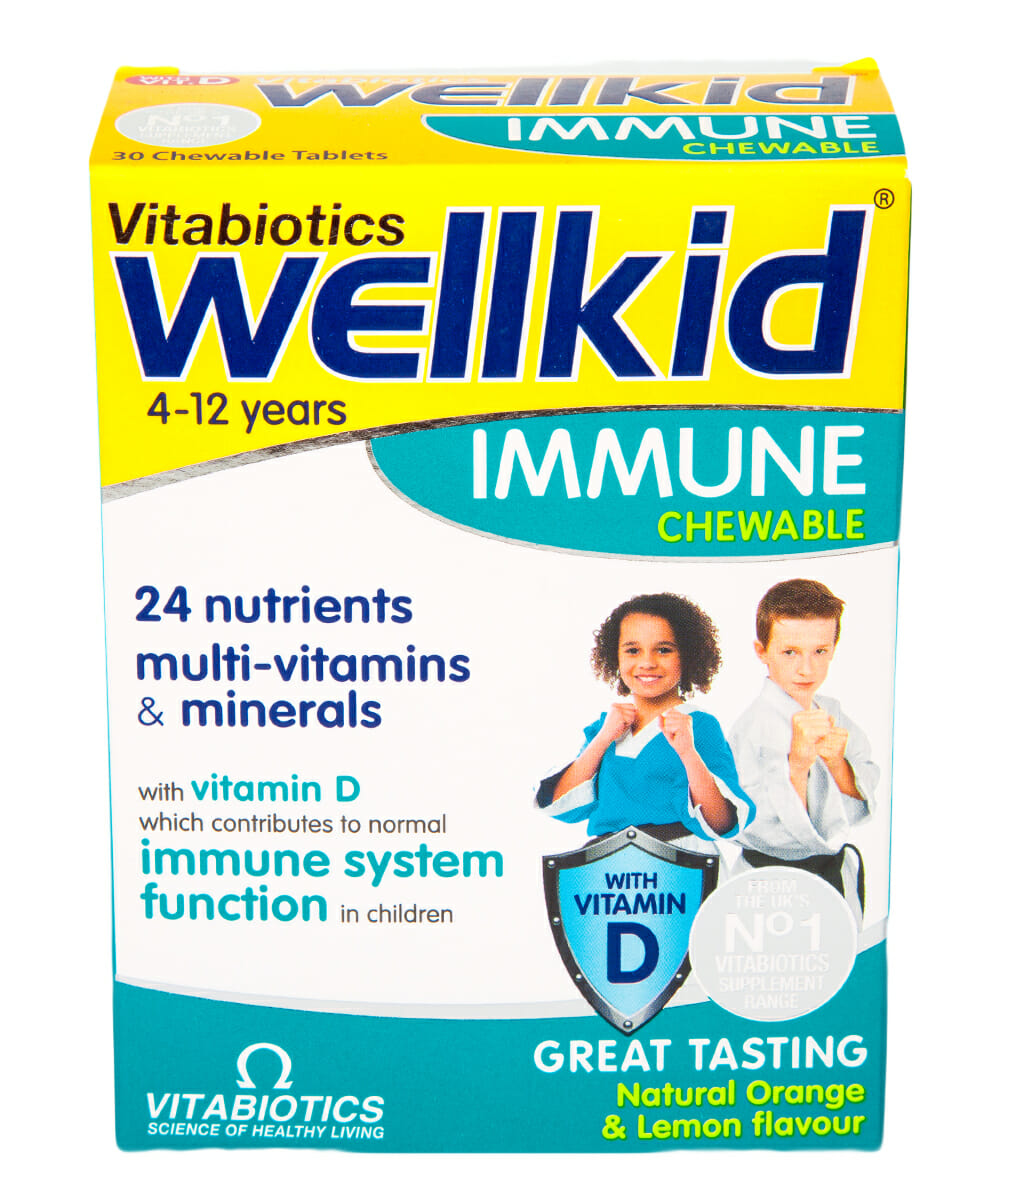 Vitabiotics Wellkid Immune Chewable 30tabs Kasha Kenyakasha Kenya